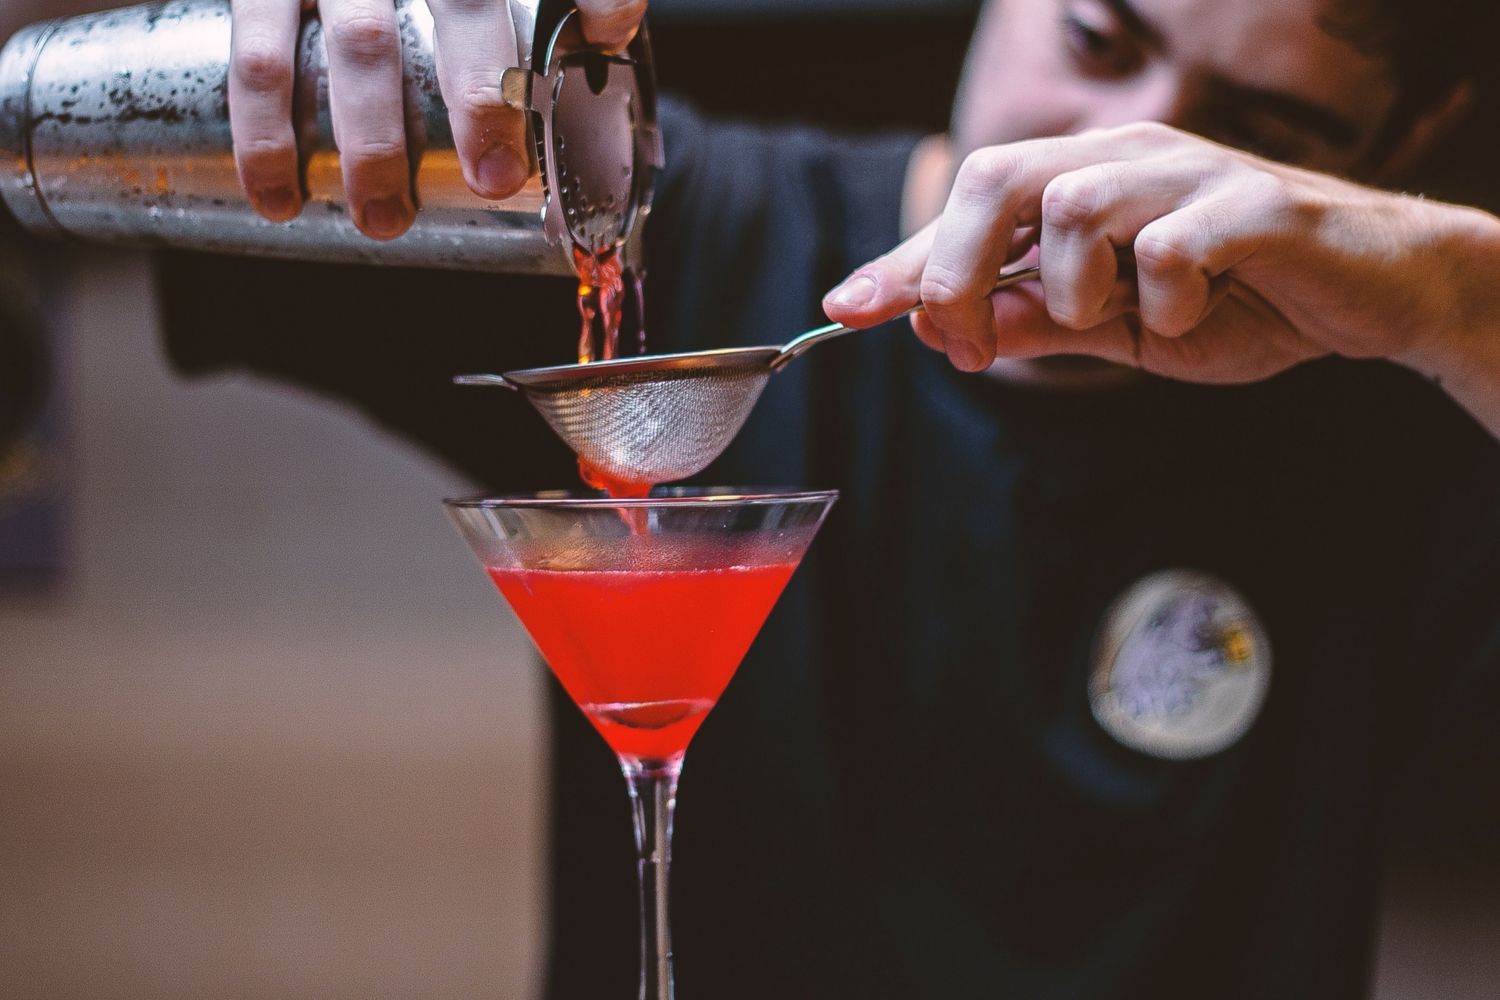 Cosmopolitan-cocktail-being-made-at-a-bar.jpg